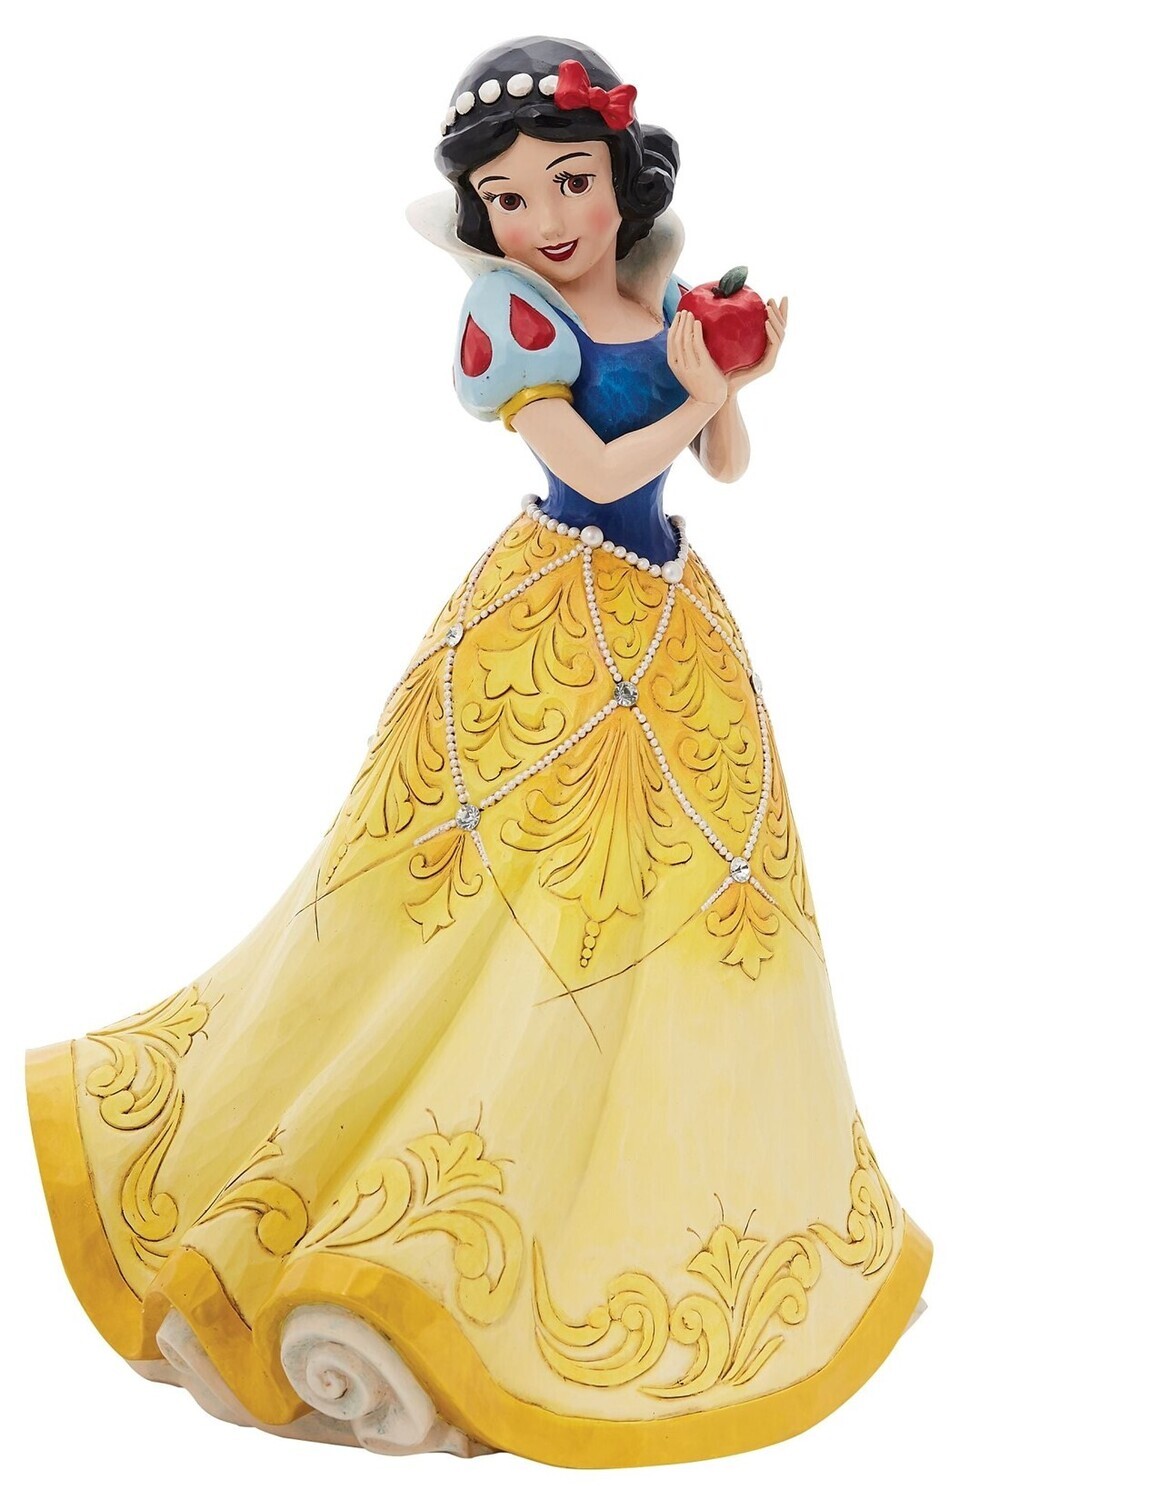 Jim Shore Disney Traditions "Snow White Deluxe" 15" Figurine (6010882)